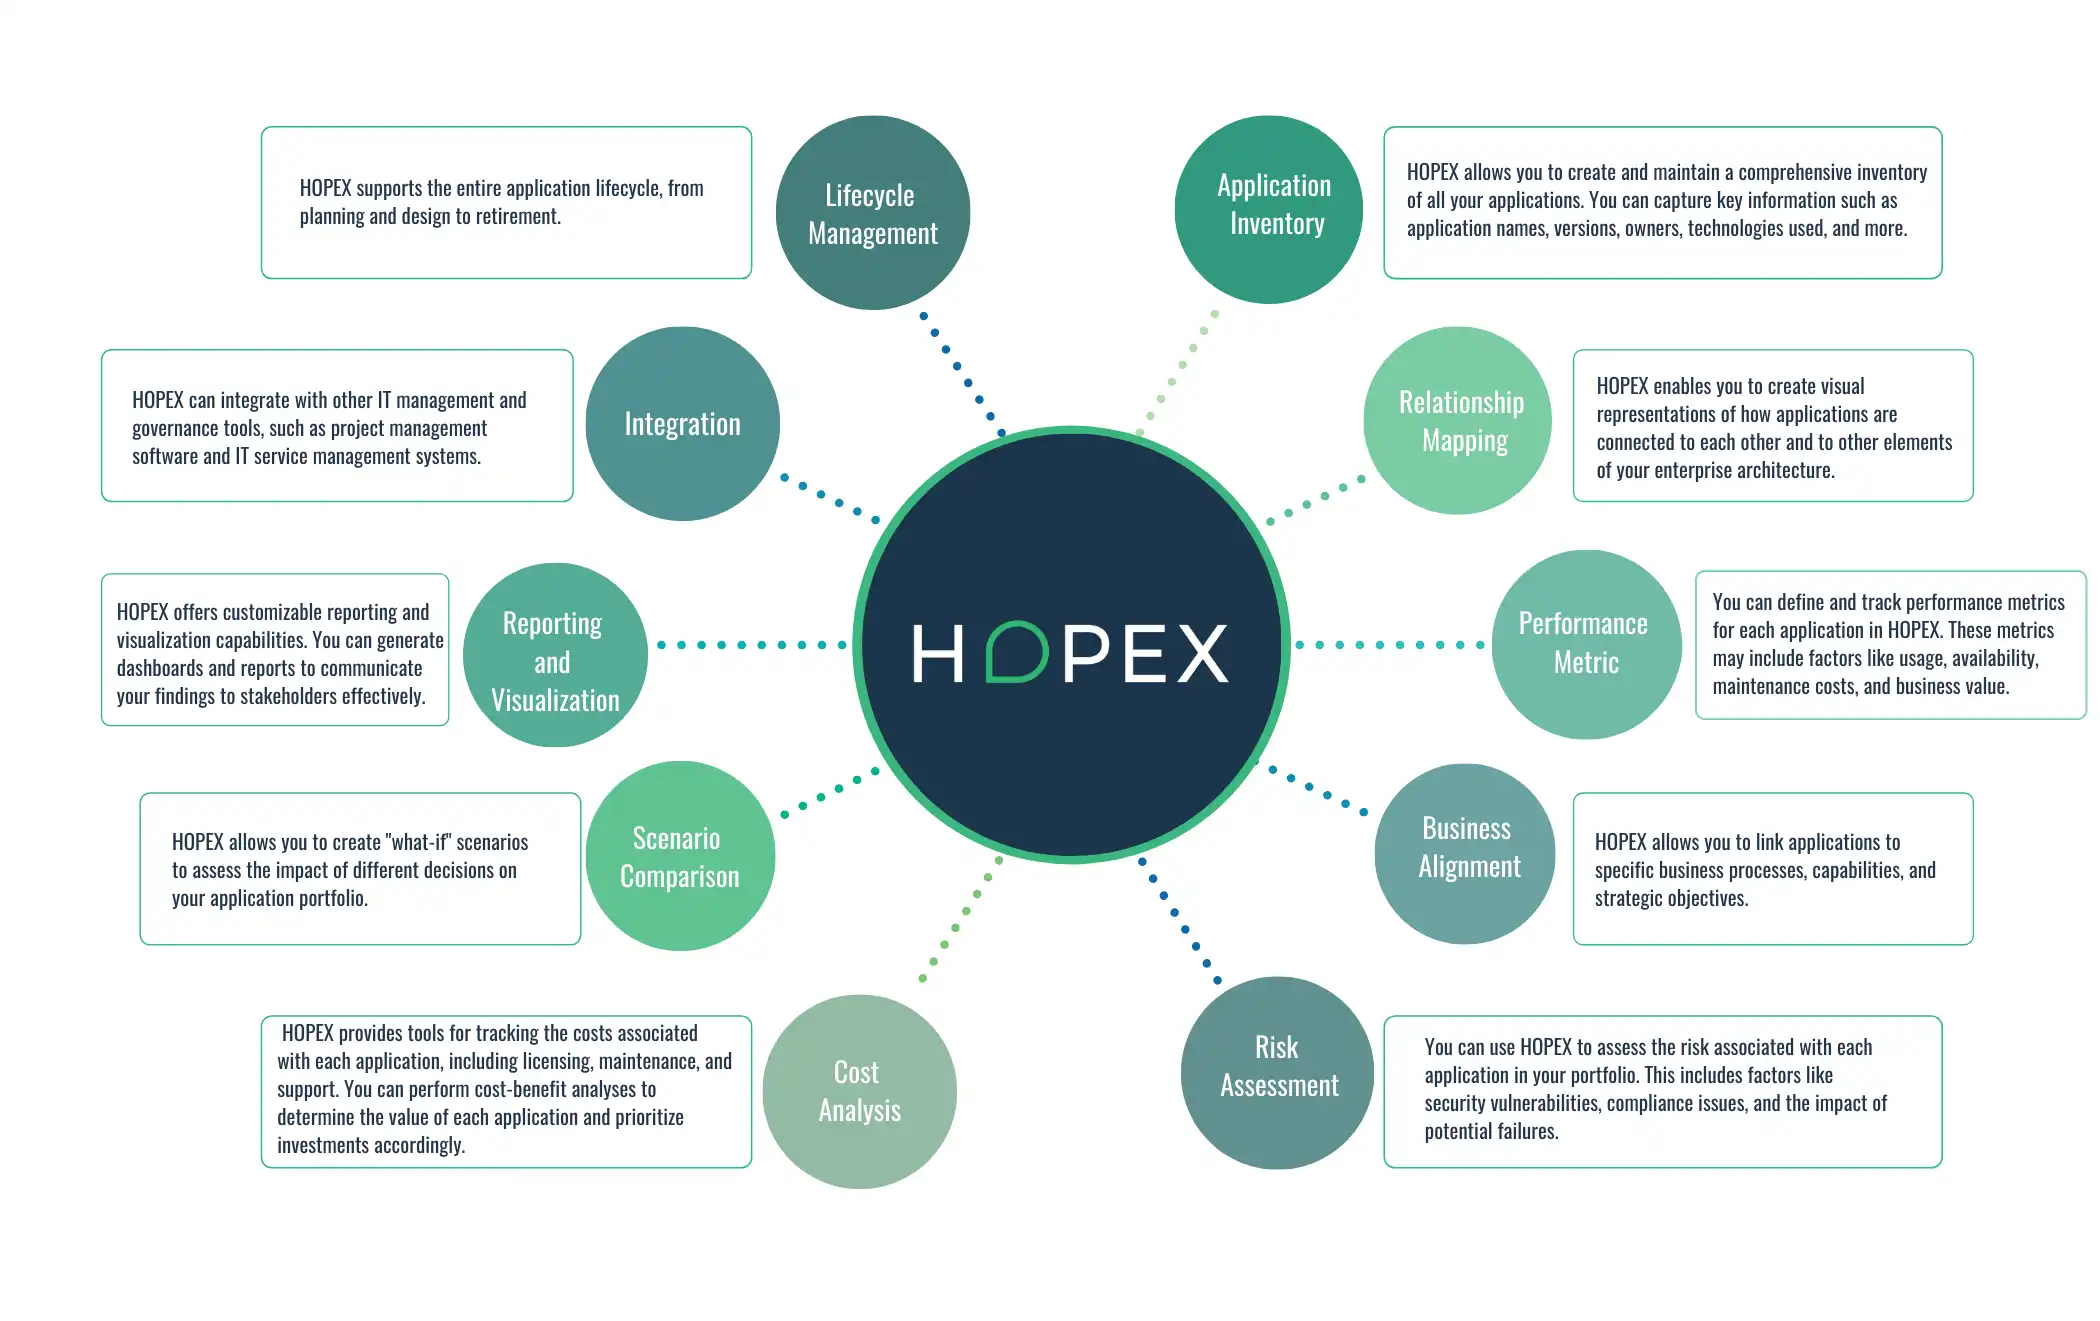 HOPEX Assist in Application Portfolio Assessment?